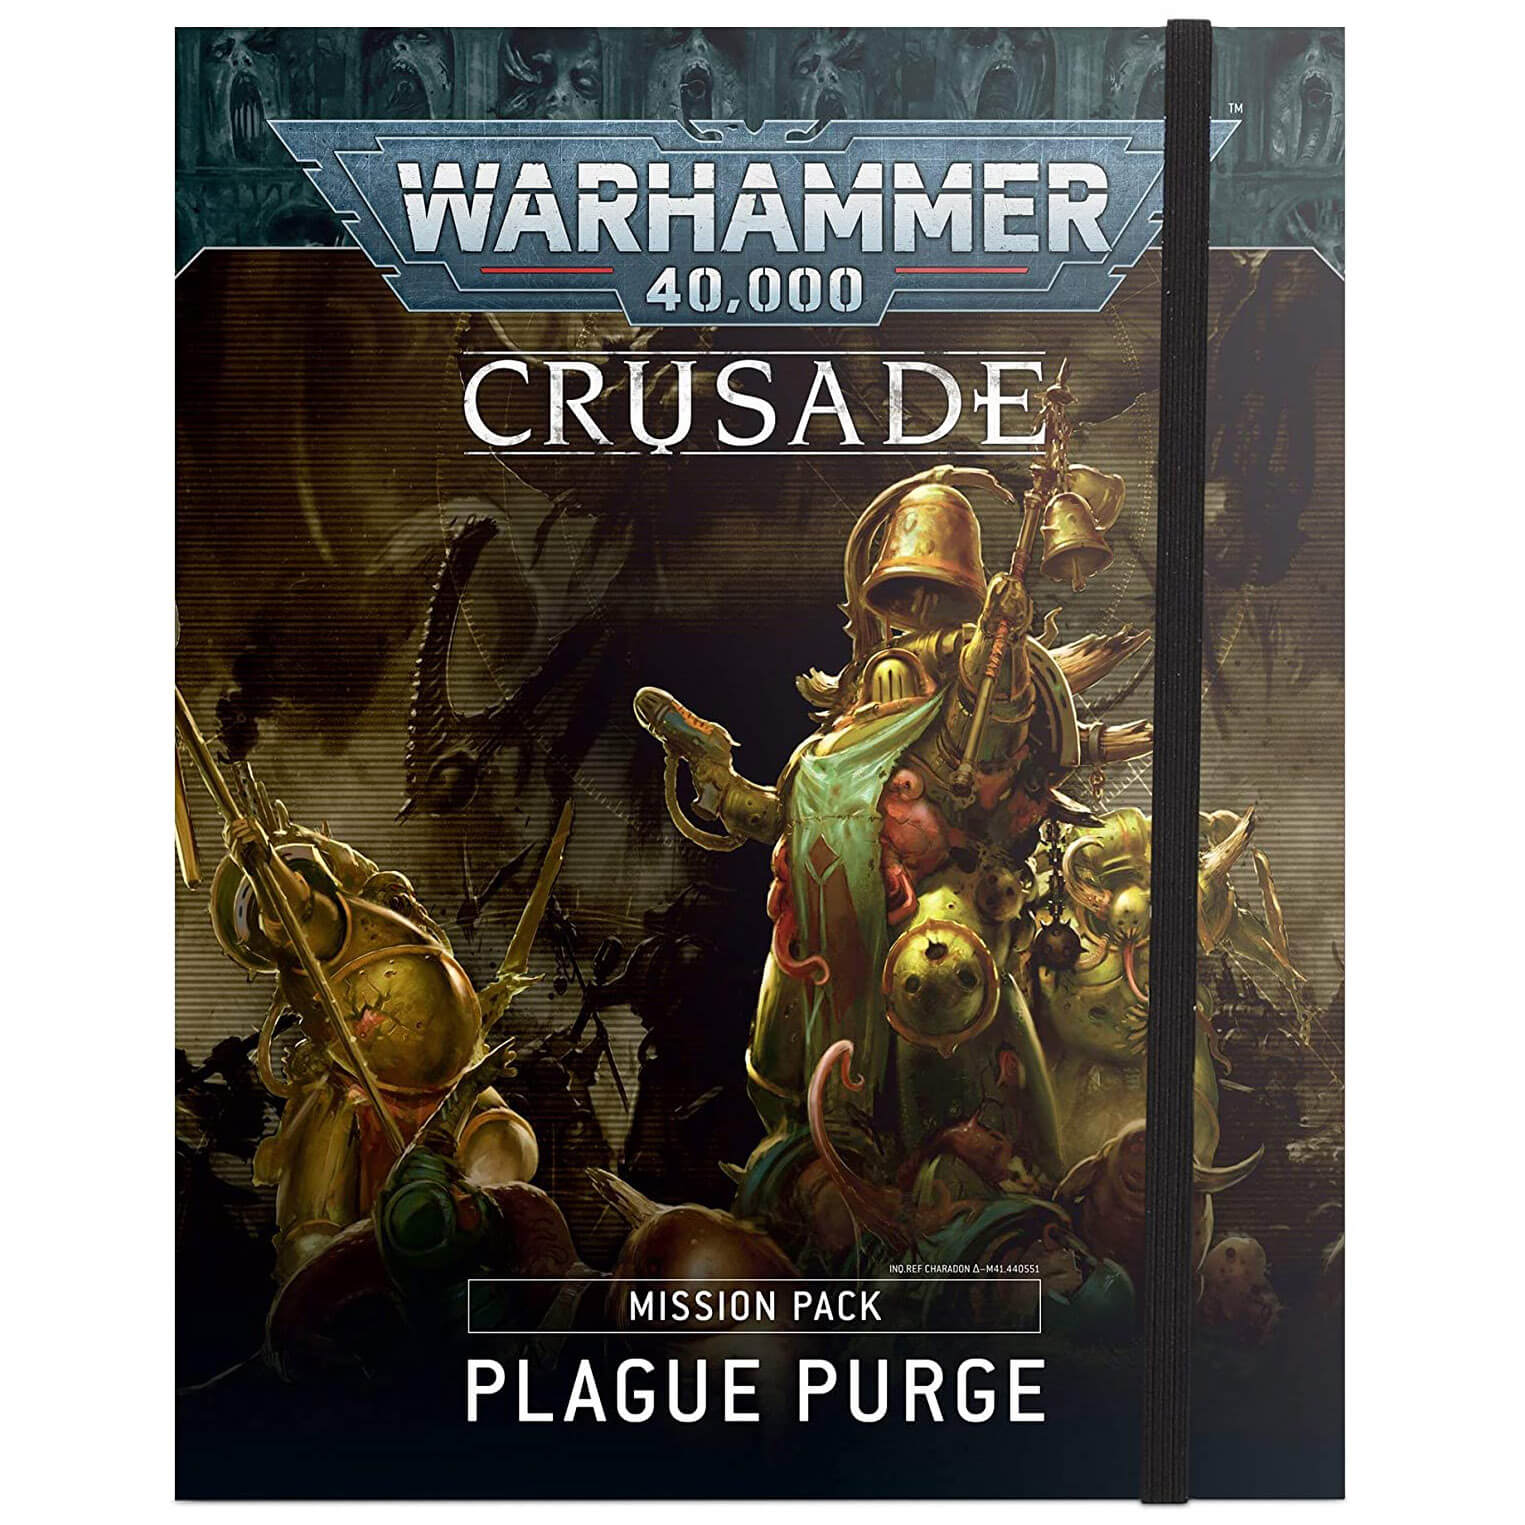 Warhammer 40k Crusade Mission Pack Plague Purge